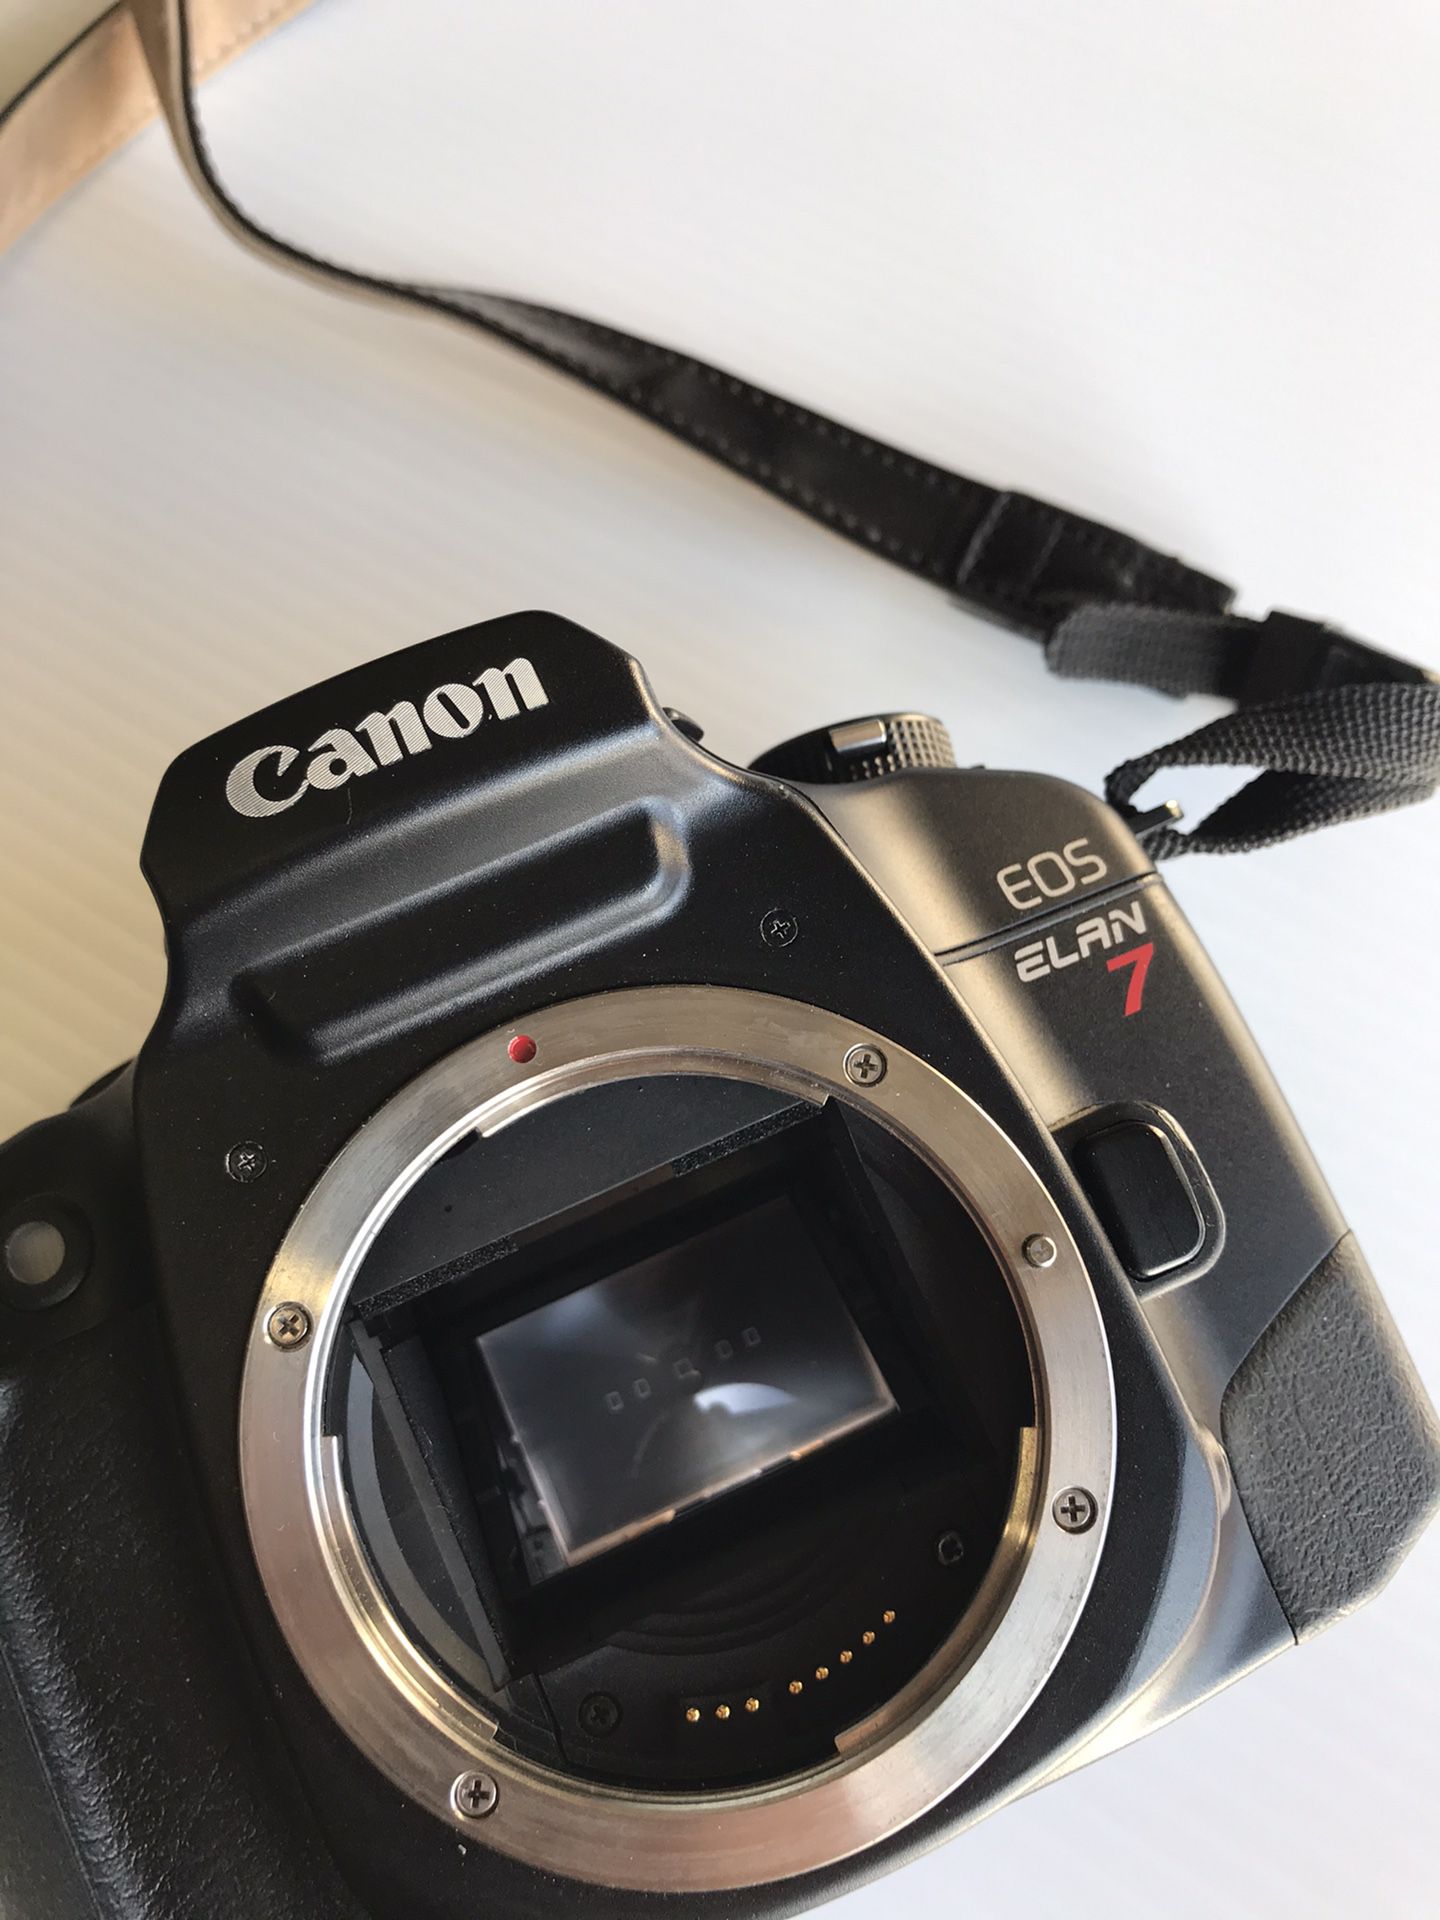 Canon elan 7 film camera